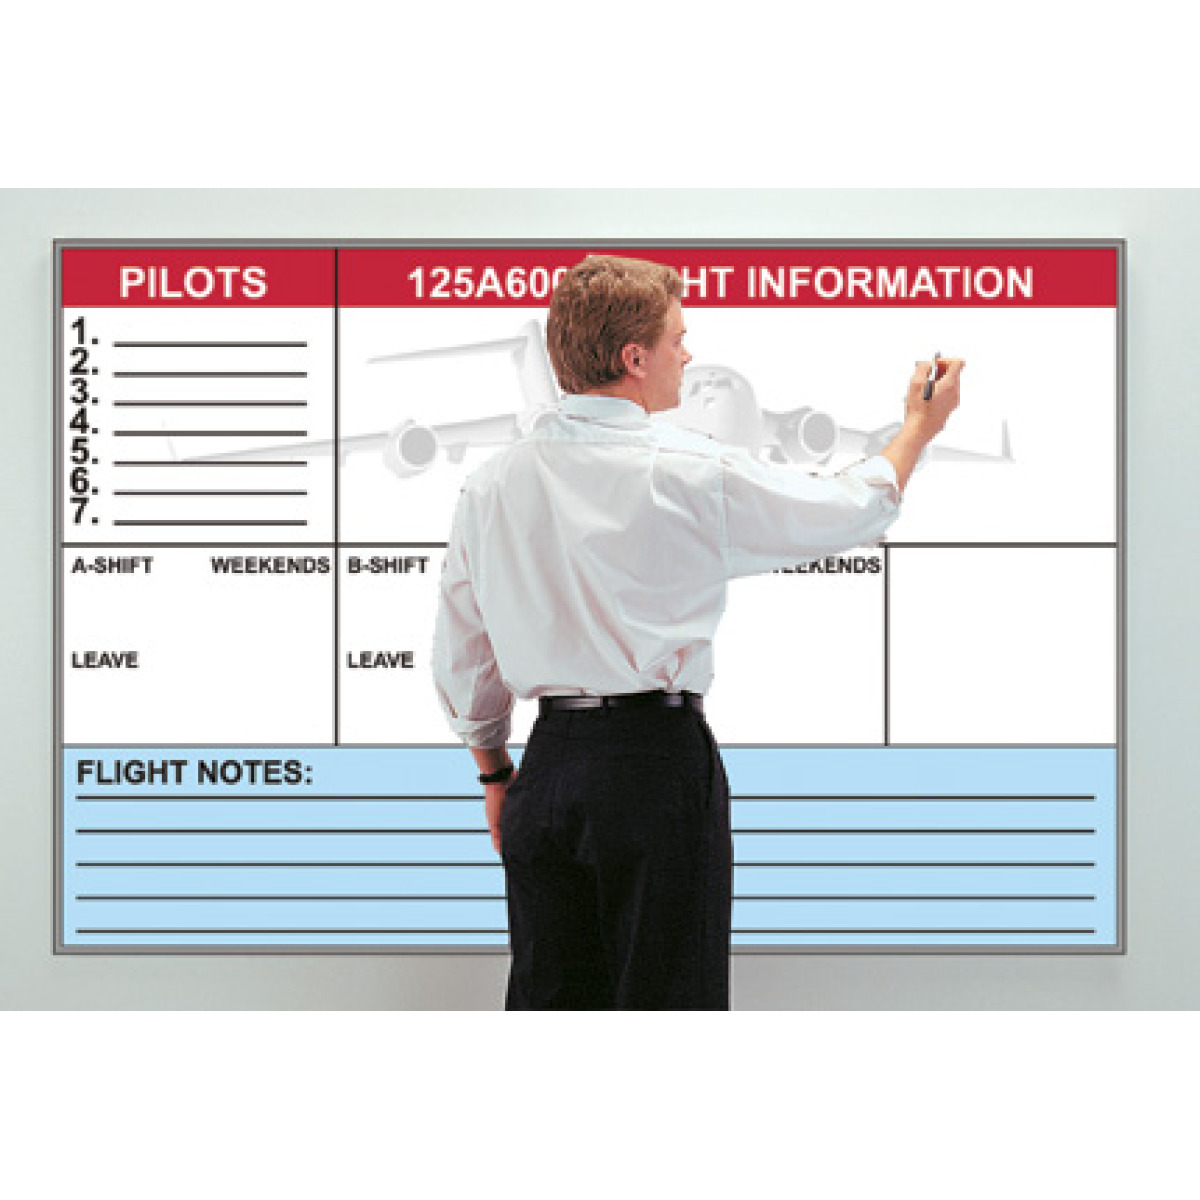 Flight training schedule whiteboard